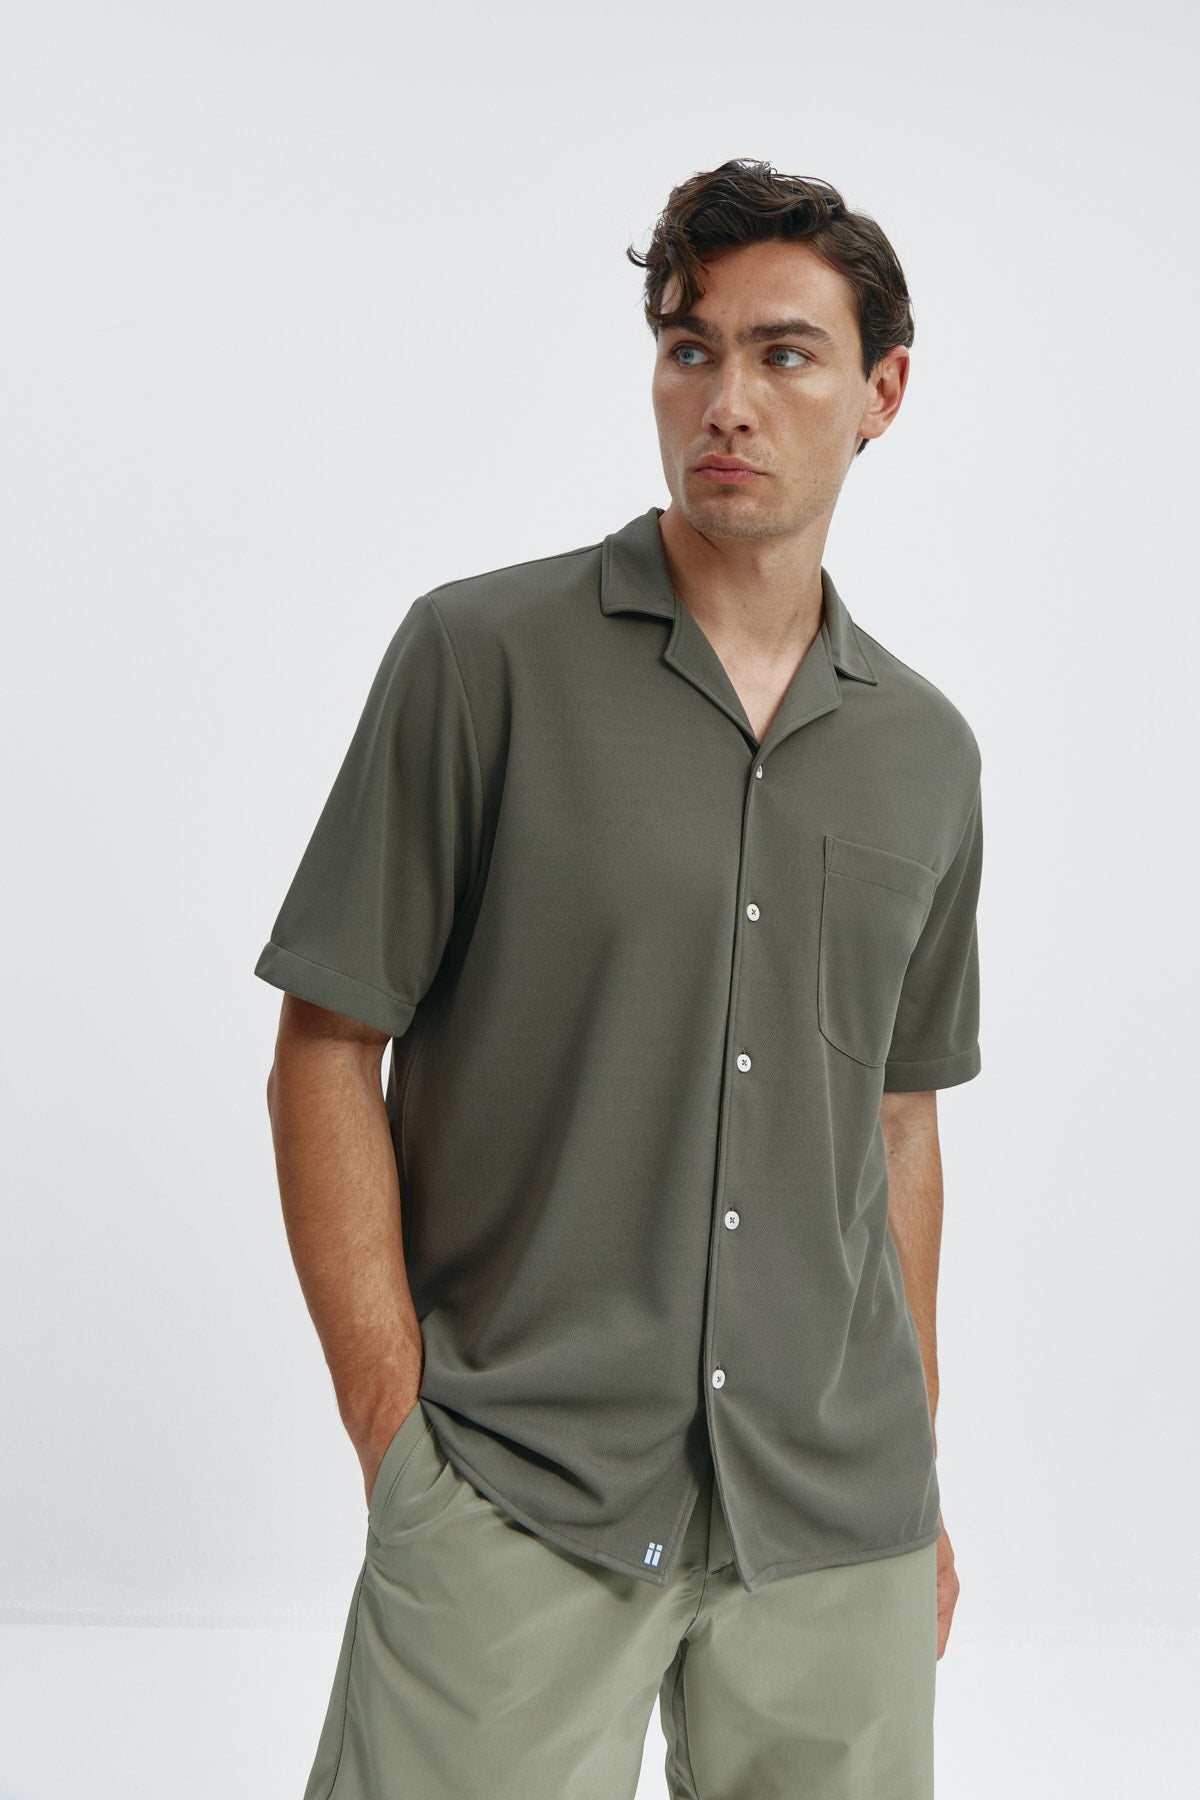 Camisa manga corta verde kaki de Sepiia, fresca y elegante, perfecta para el verano. Foto frente